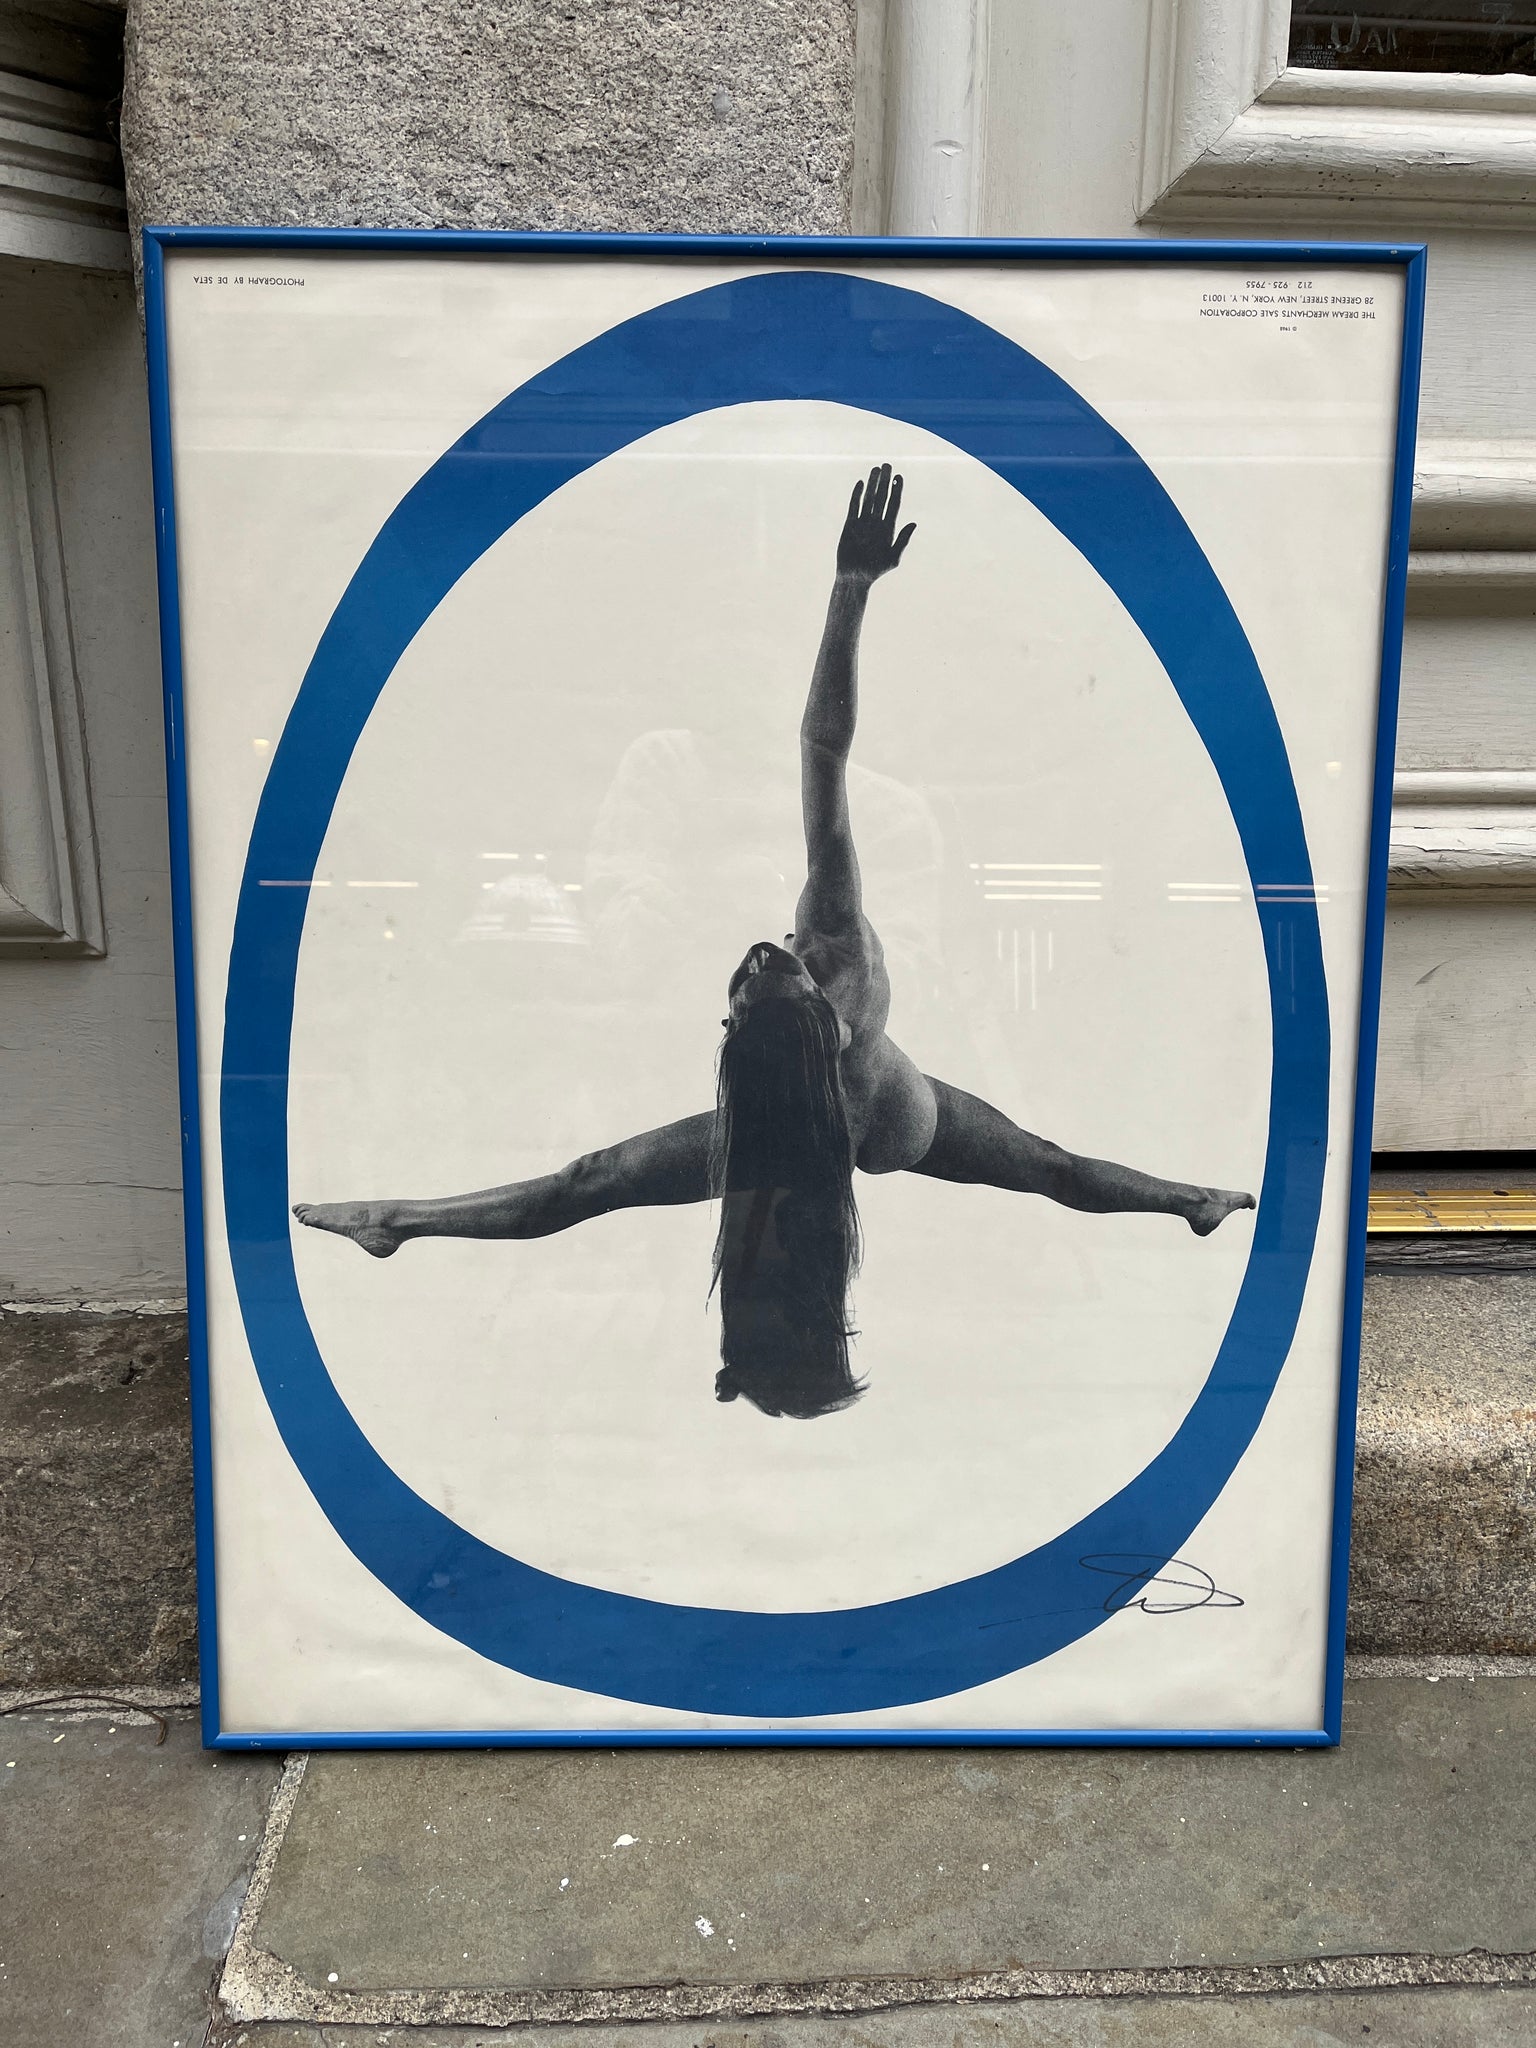 1968 The Dream Merchants Sales Corporation signed print of gymnast photographed by De Seta